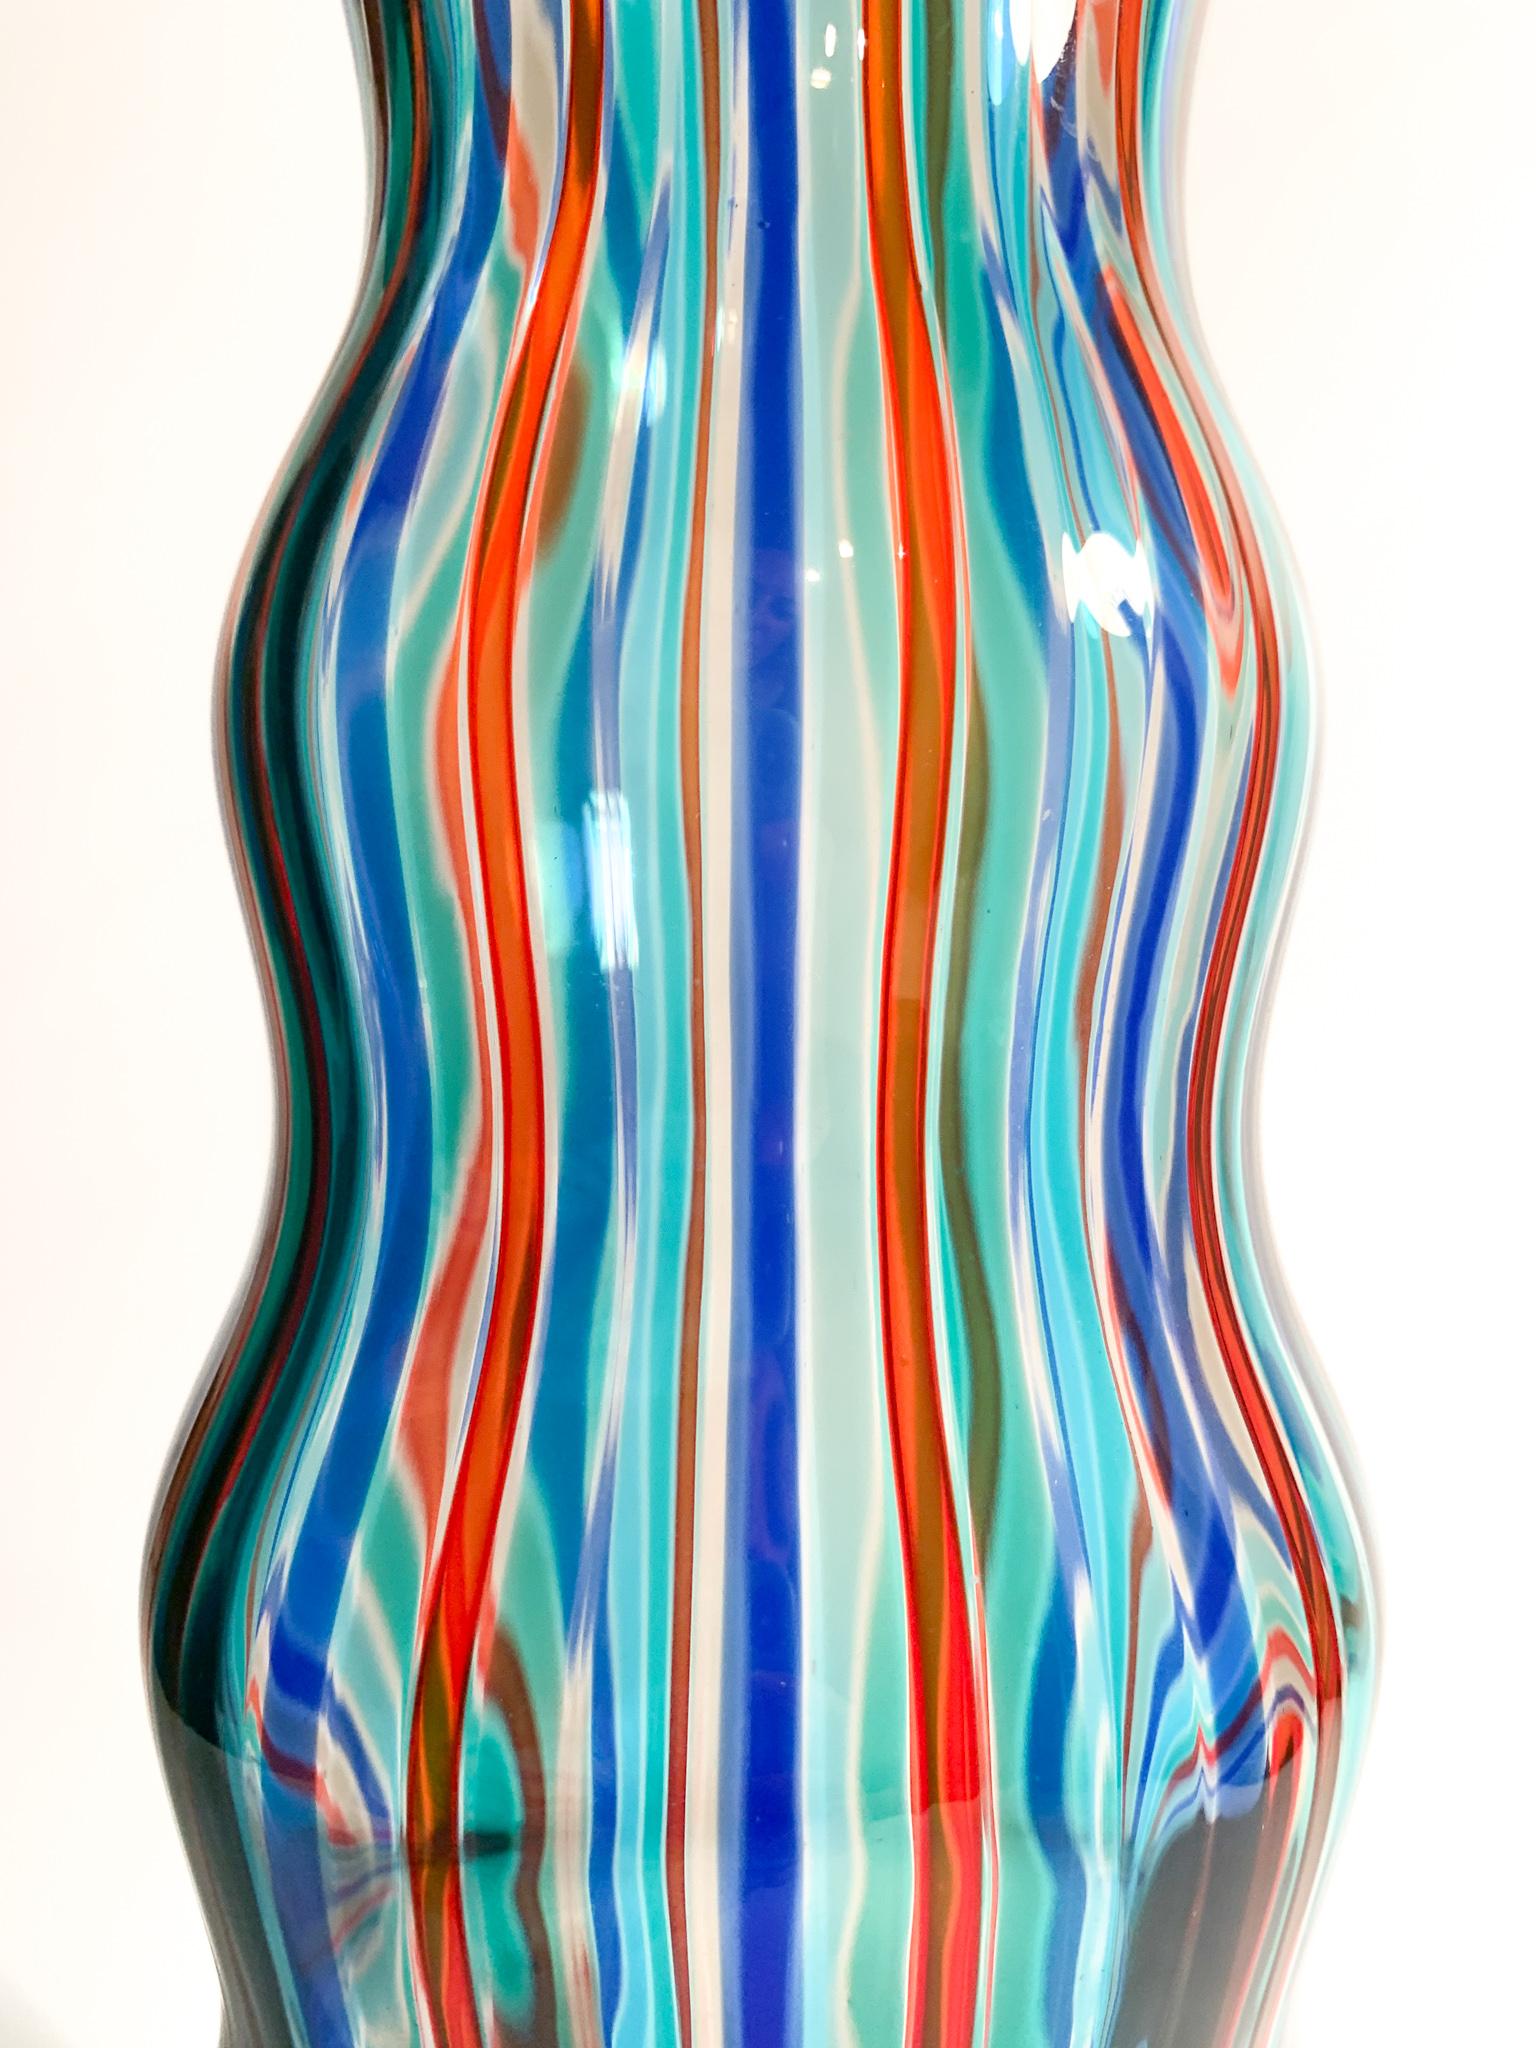 'Arado' Vase by Alessandro Mendini for Venini from 1988 For Sale 8